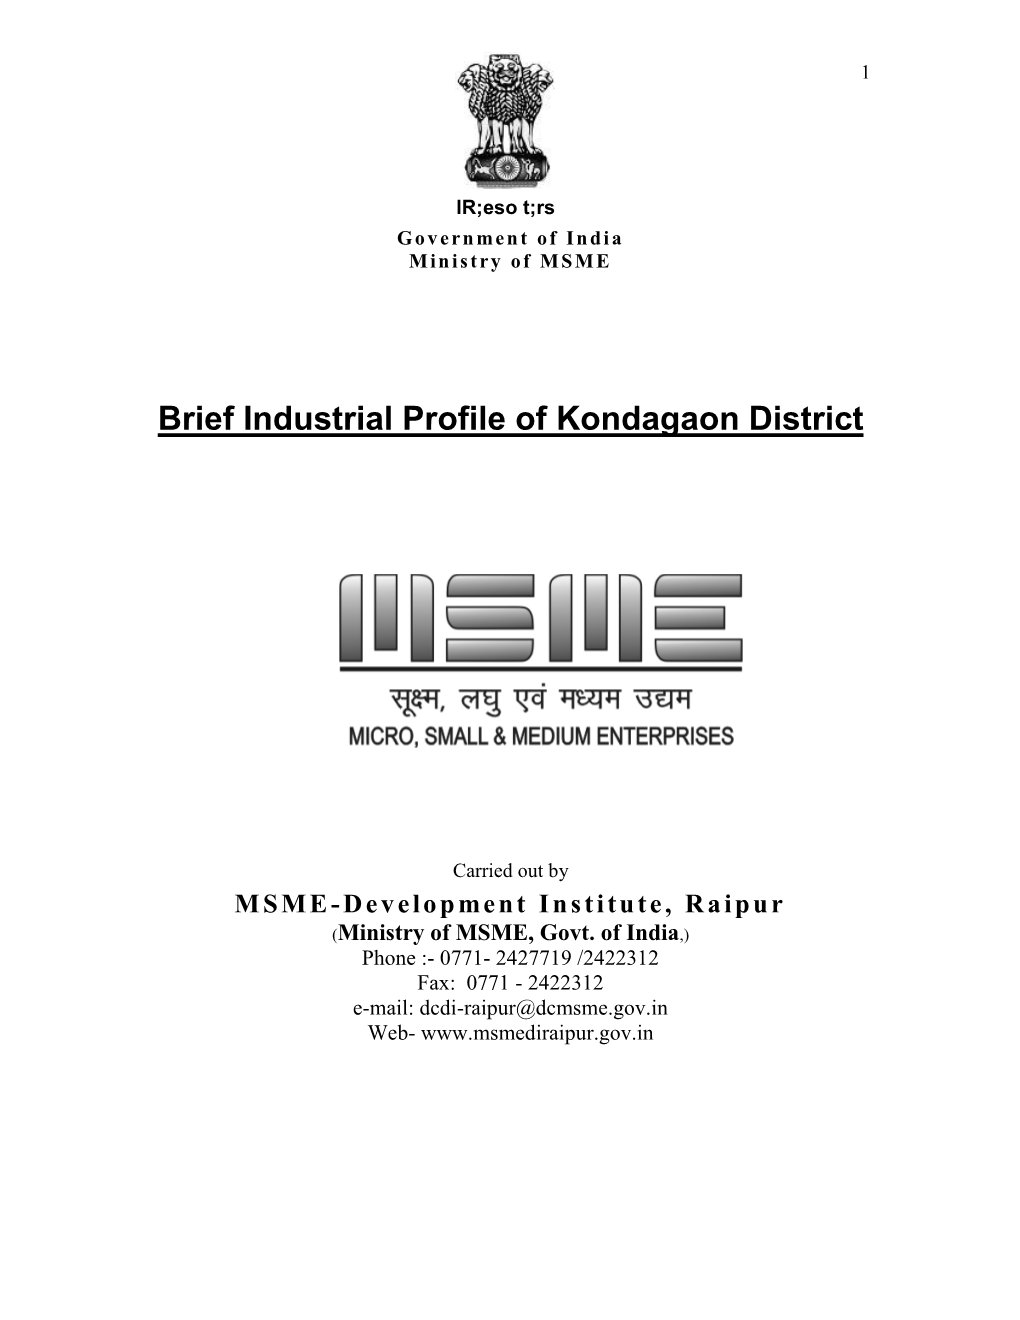 Brief Industrial Profile of Kondagaon District